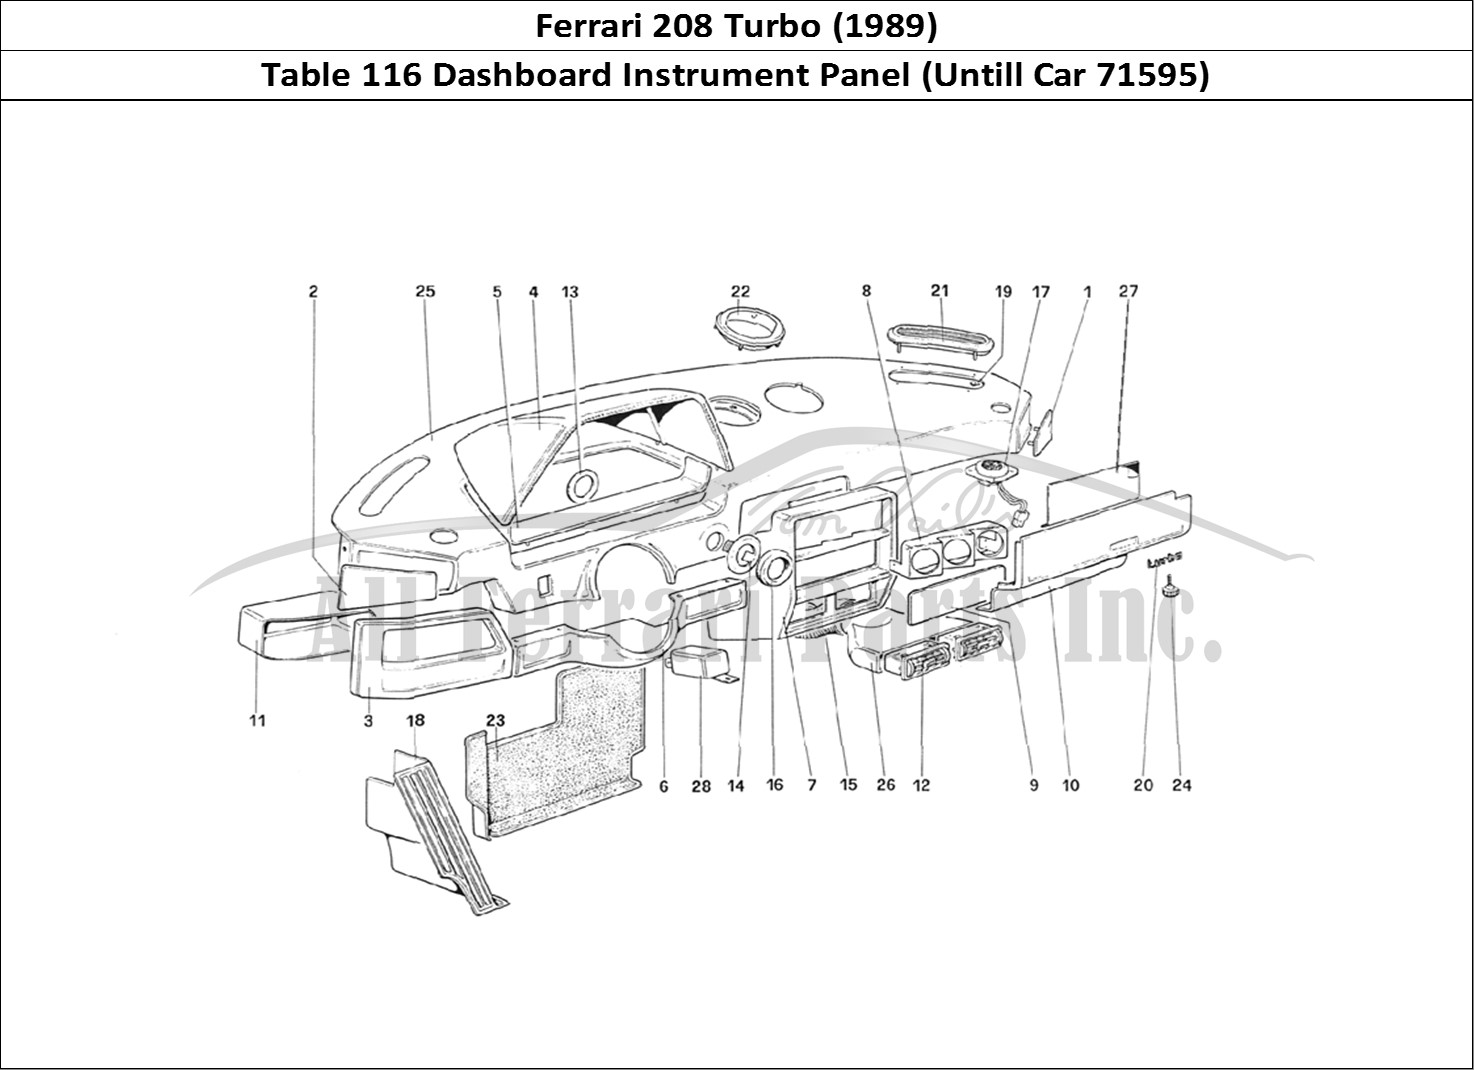 Ferrari Parts Ferrari 208 Turbo (1989) Page 116 Instruments Panel (Untill